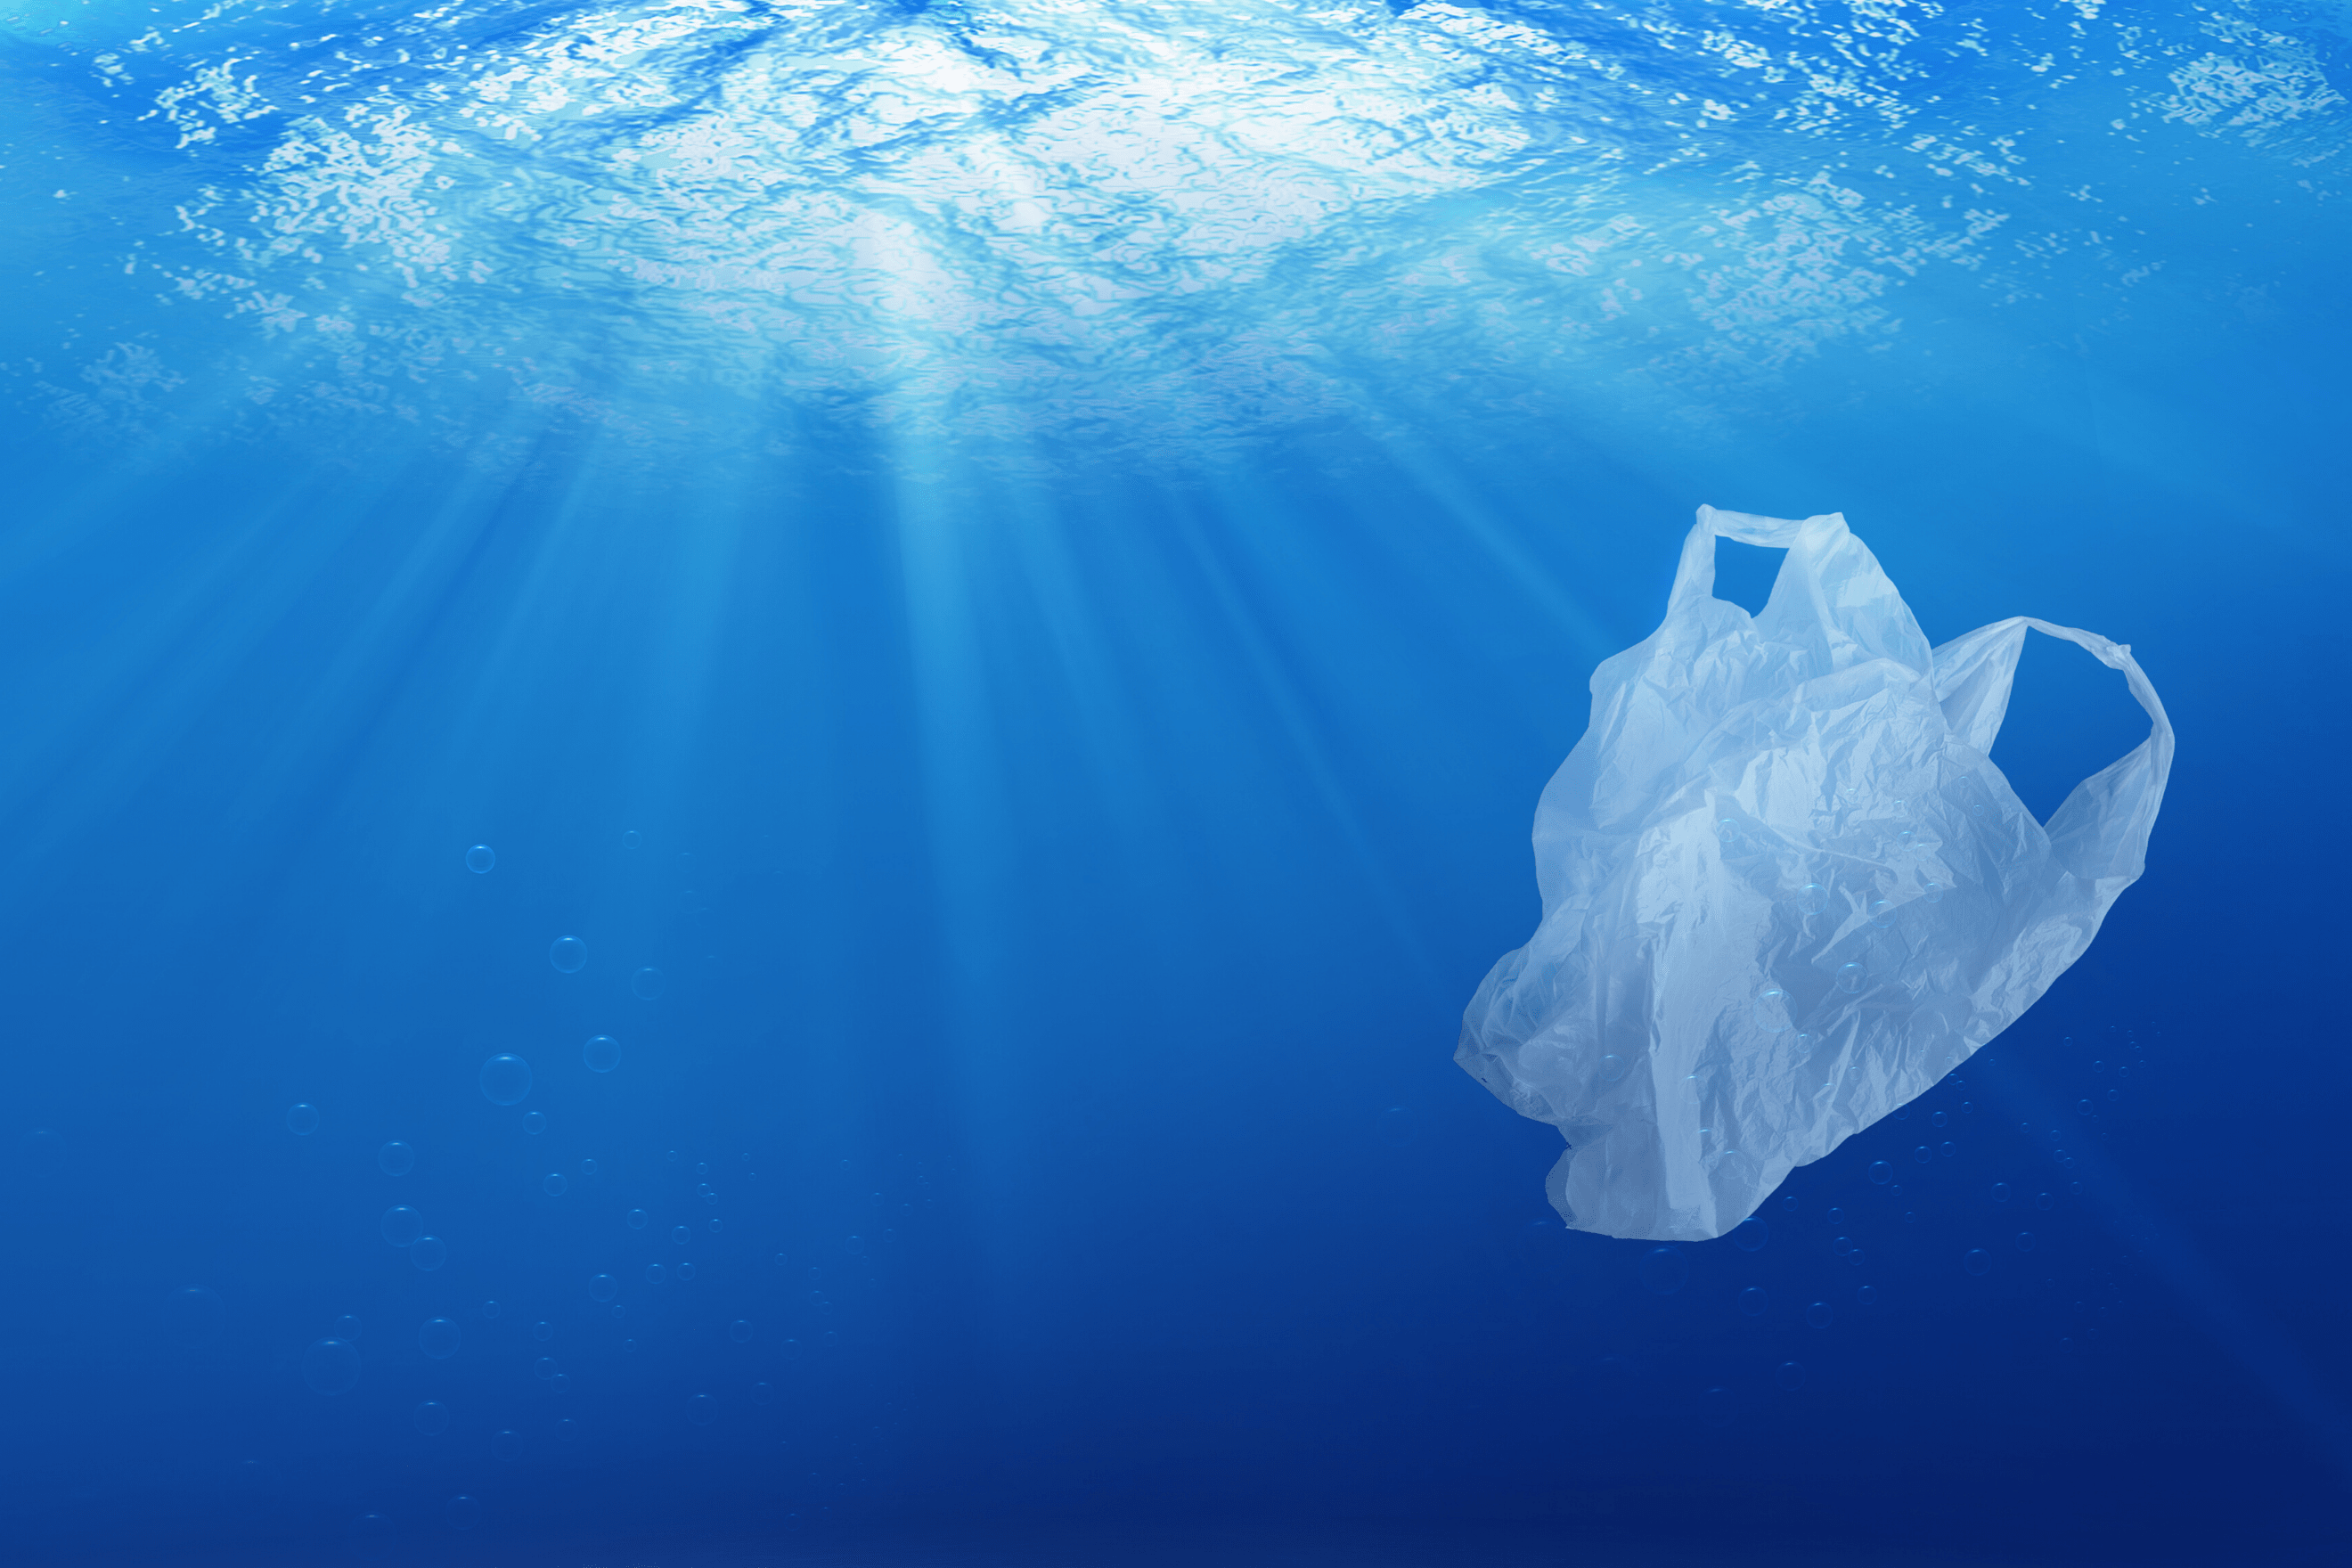 https://treadingmyownpath.com/wp-content/uploads/2018/06/Plastic-bag-in-ocean-min.png